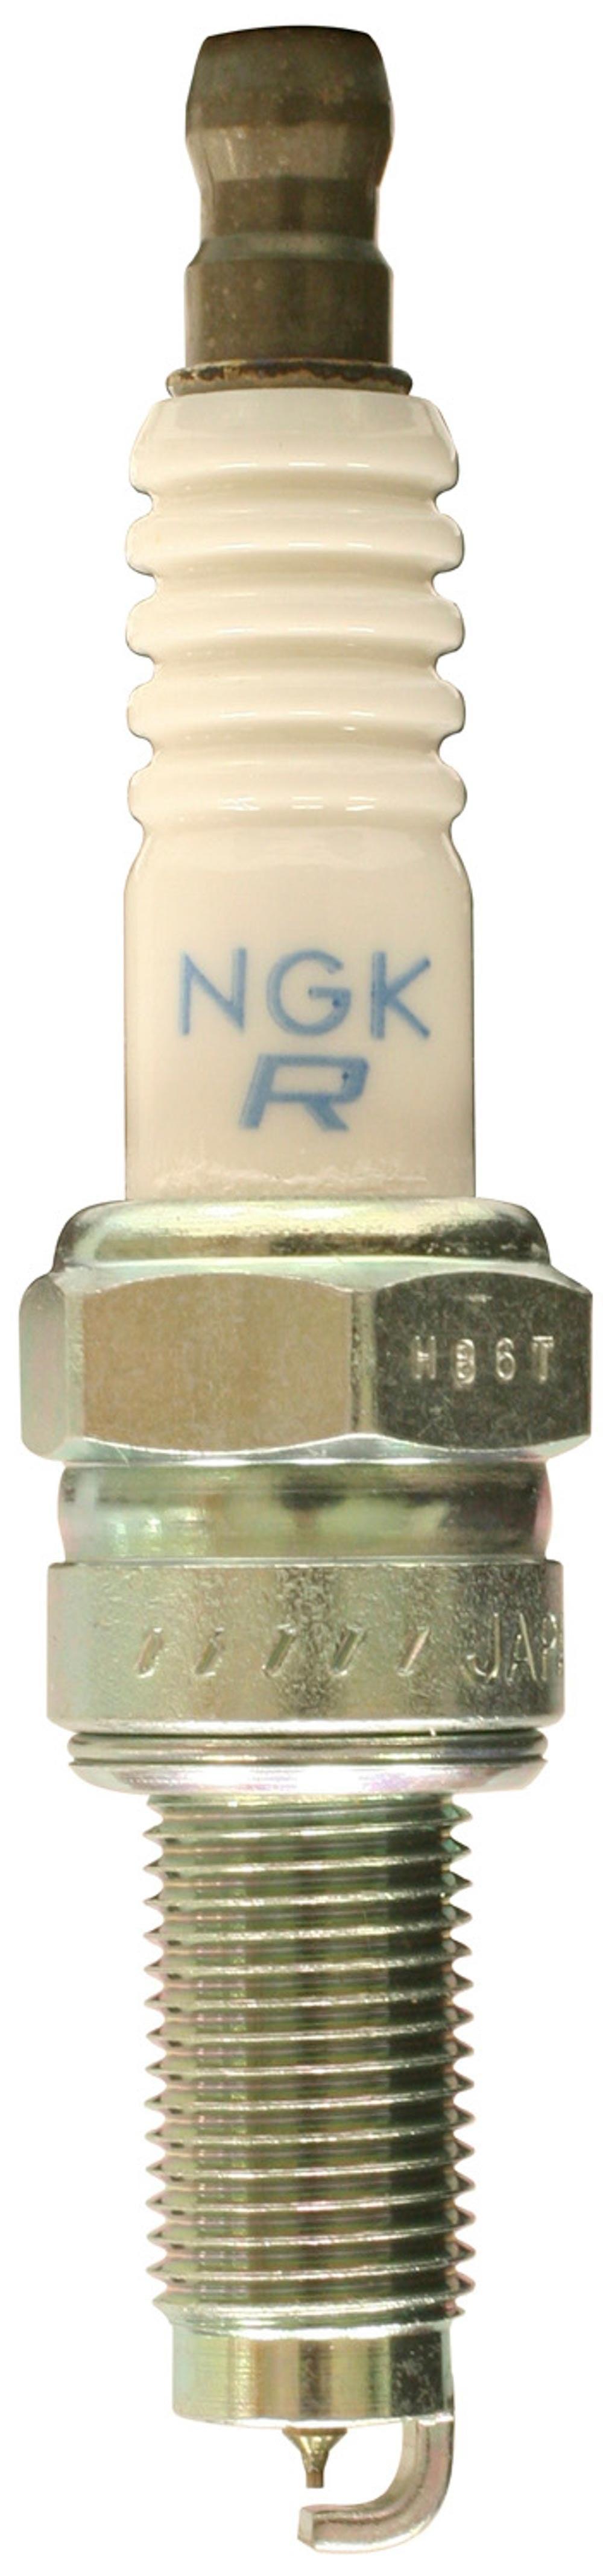 NGK Spark Plug - Stock #6914 - Burlile Performance Products